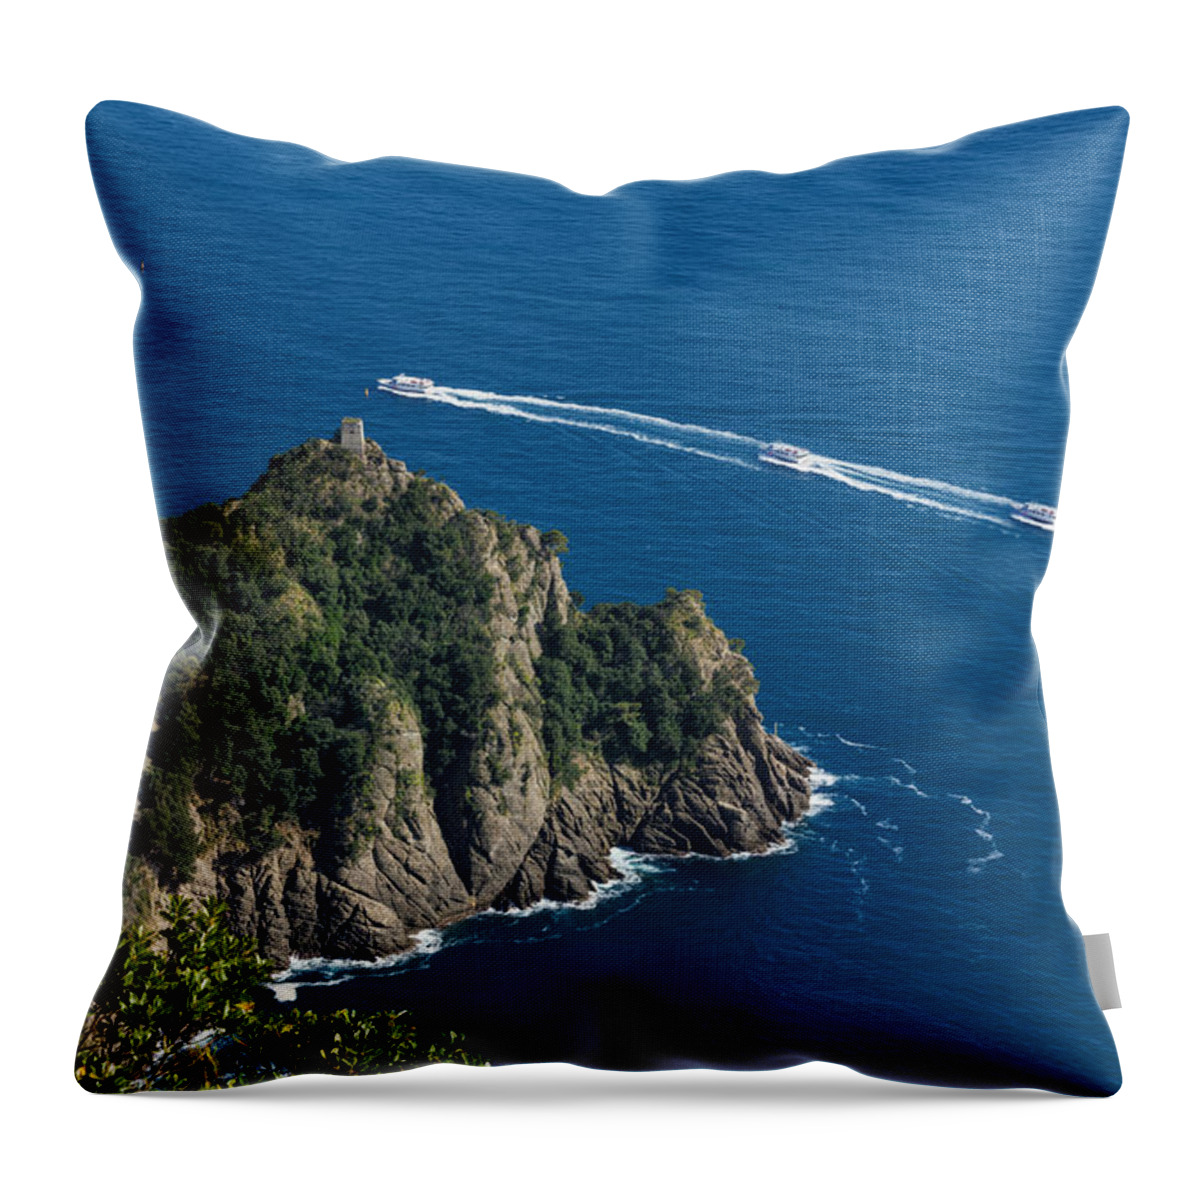 Portofino Throw Pillow featuring the photograph Portofino Cala Dell'oro Bay Ancient Guard Tower With Boats by Enrico Pelos